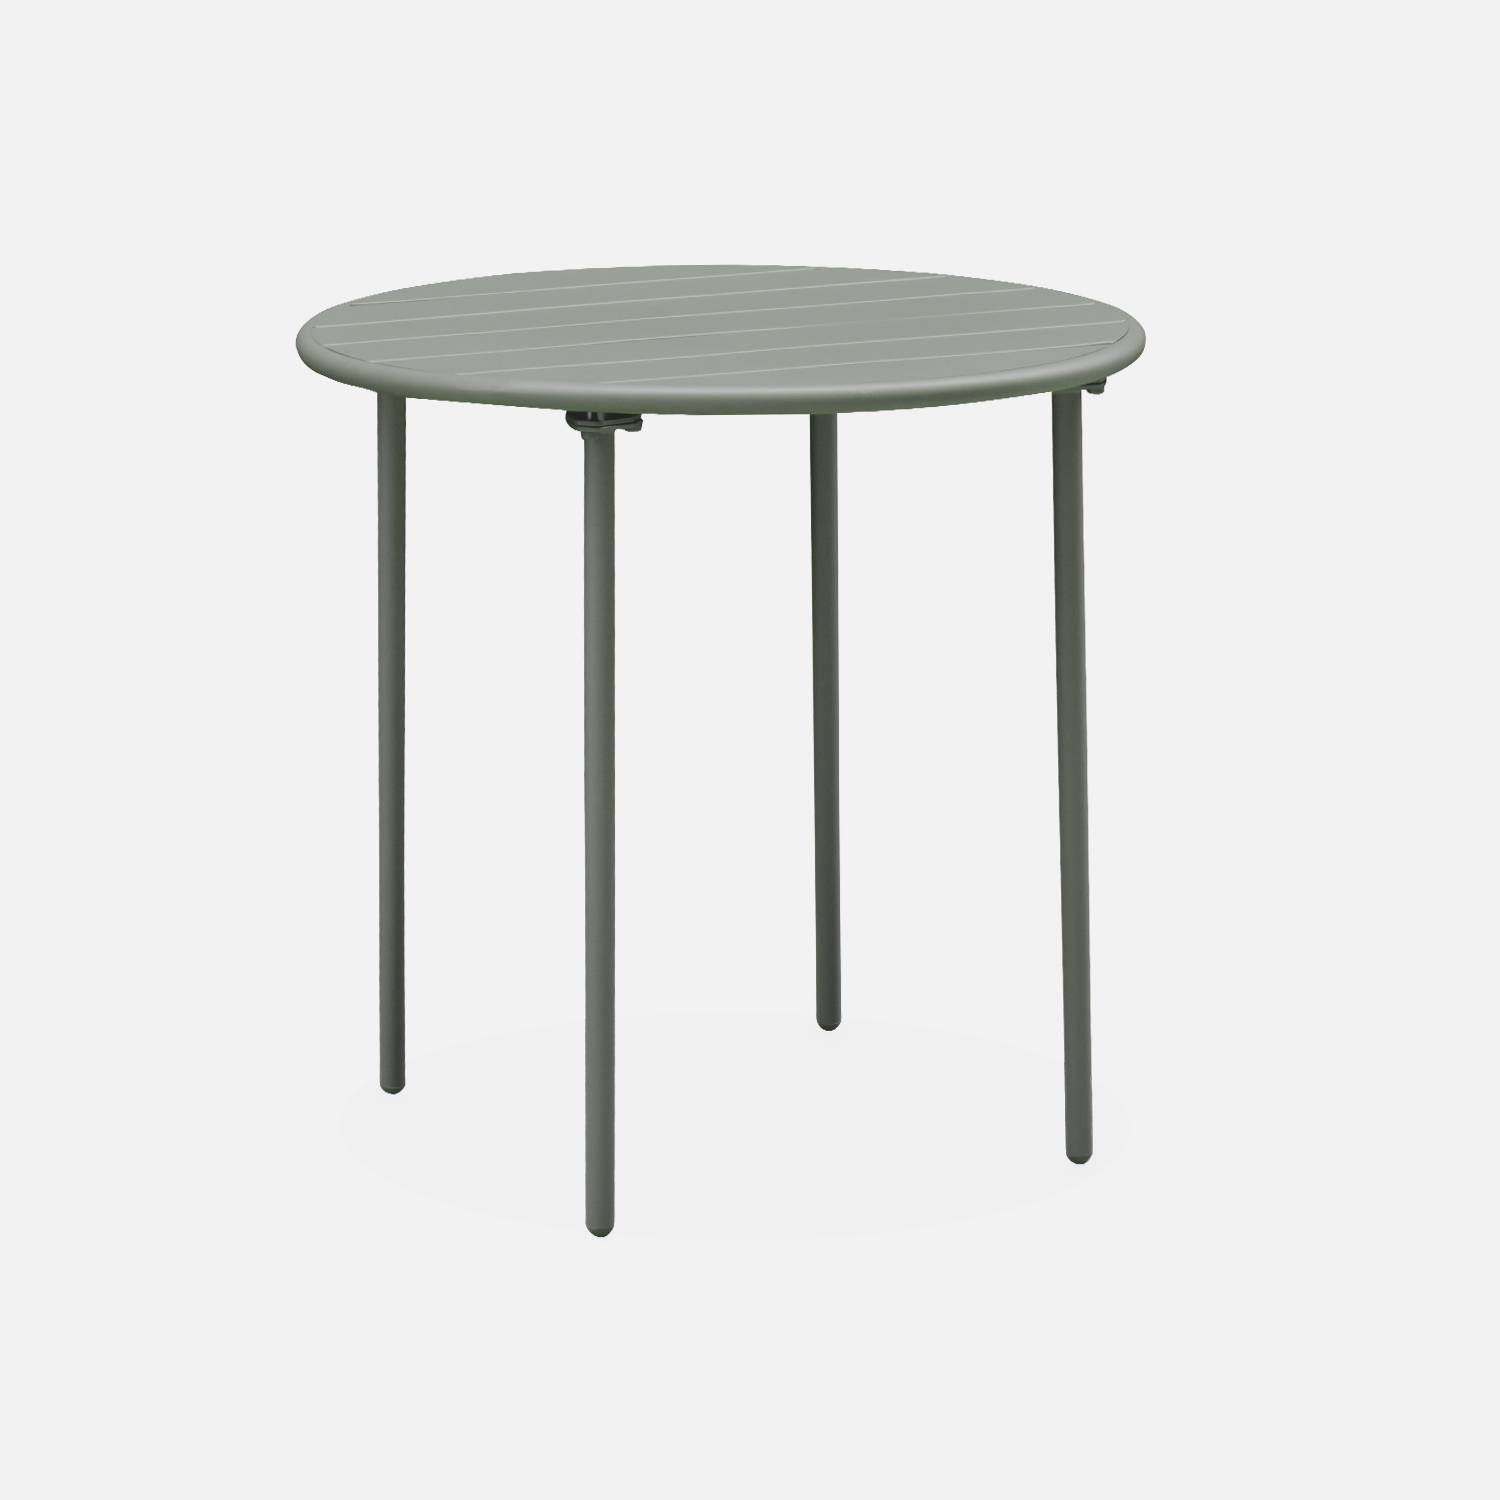 2-seater round steel garden table, Ø75cm, Khaki Green | sweeek